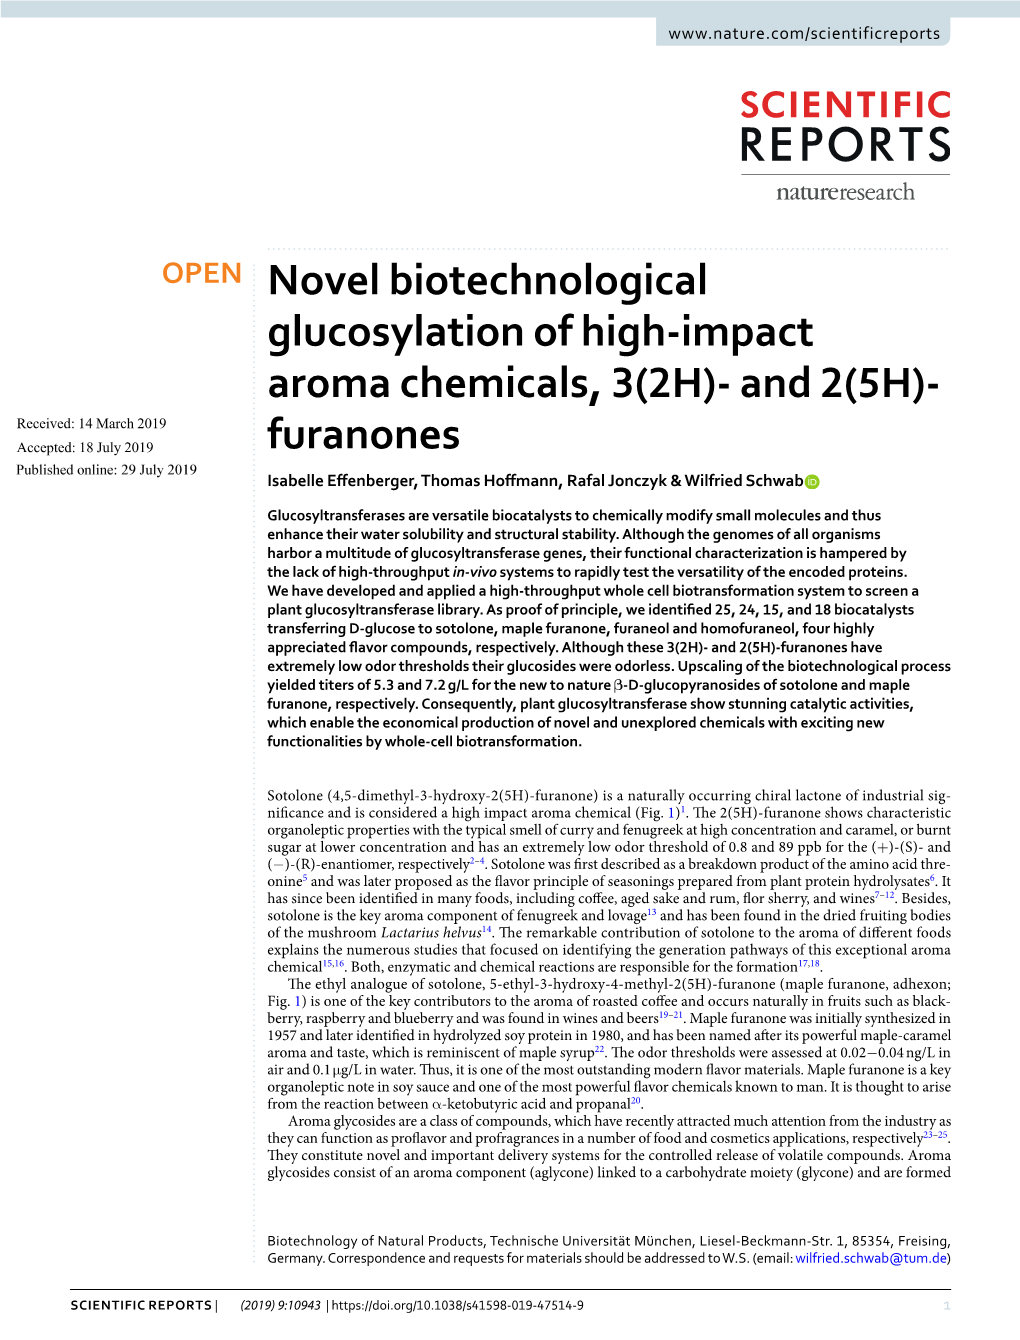 Novel Biotechnological Glucosylation of High-Impact Aroma Chemicals, 3